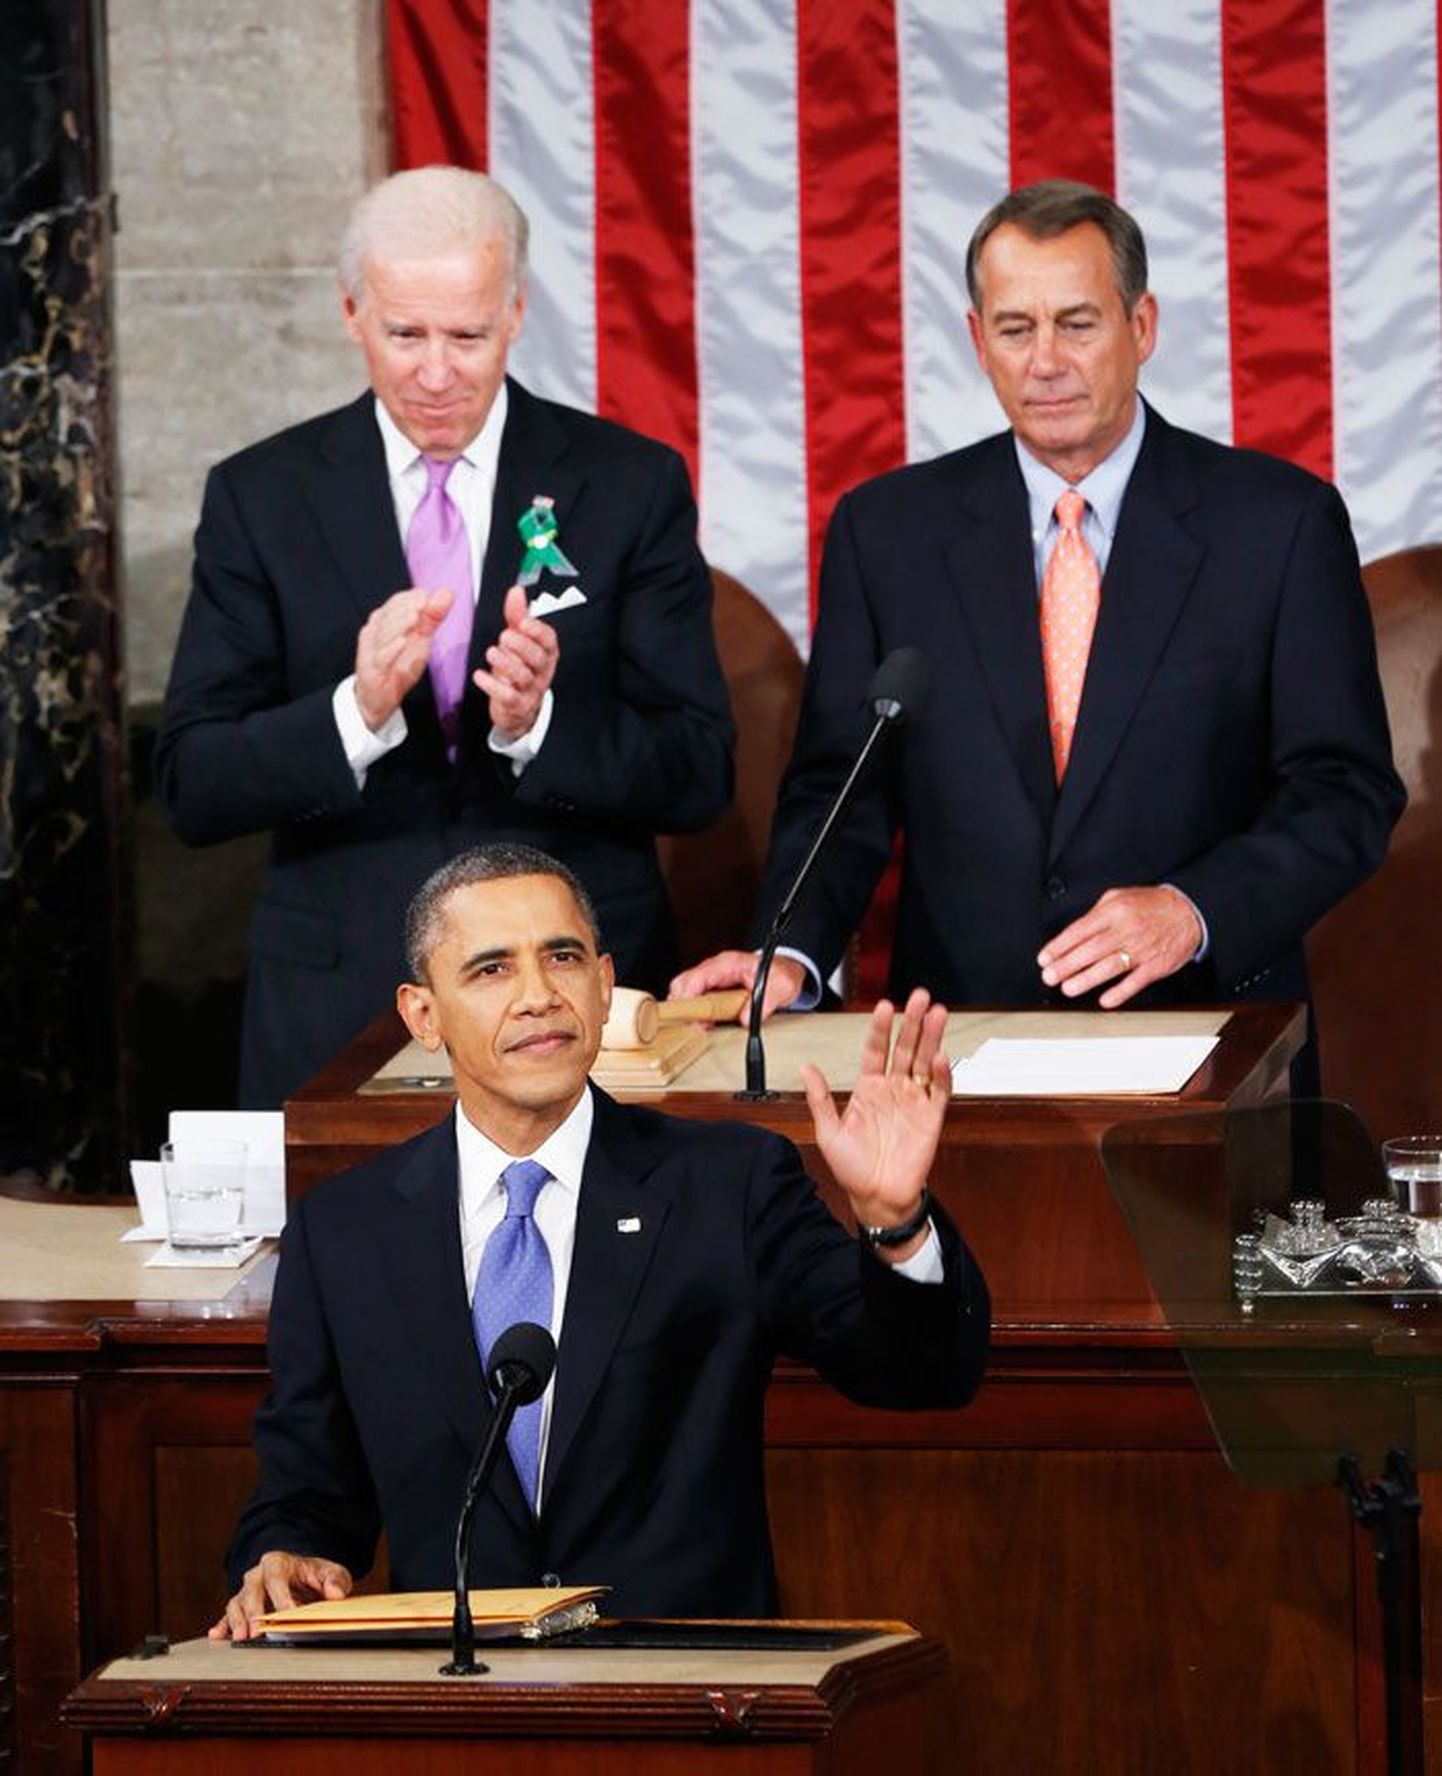 USA asepresident Joe Biden (vasakul) ja esindajatekoja spiiker John Boehner üleeile aplodeerimas president Barack Obama kõnele.